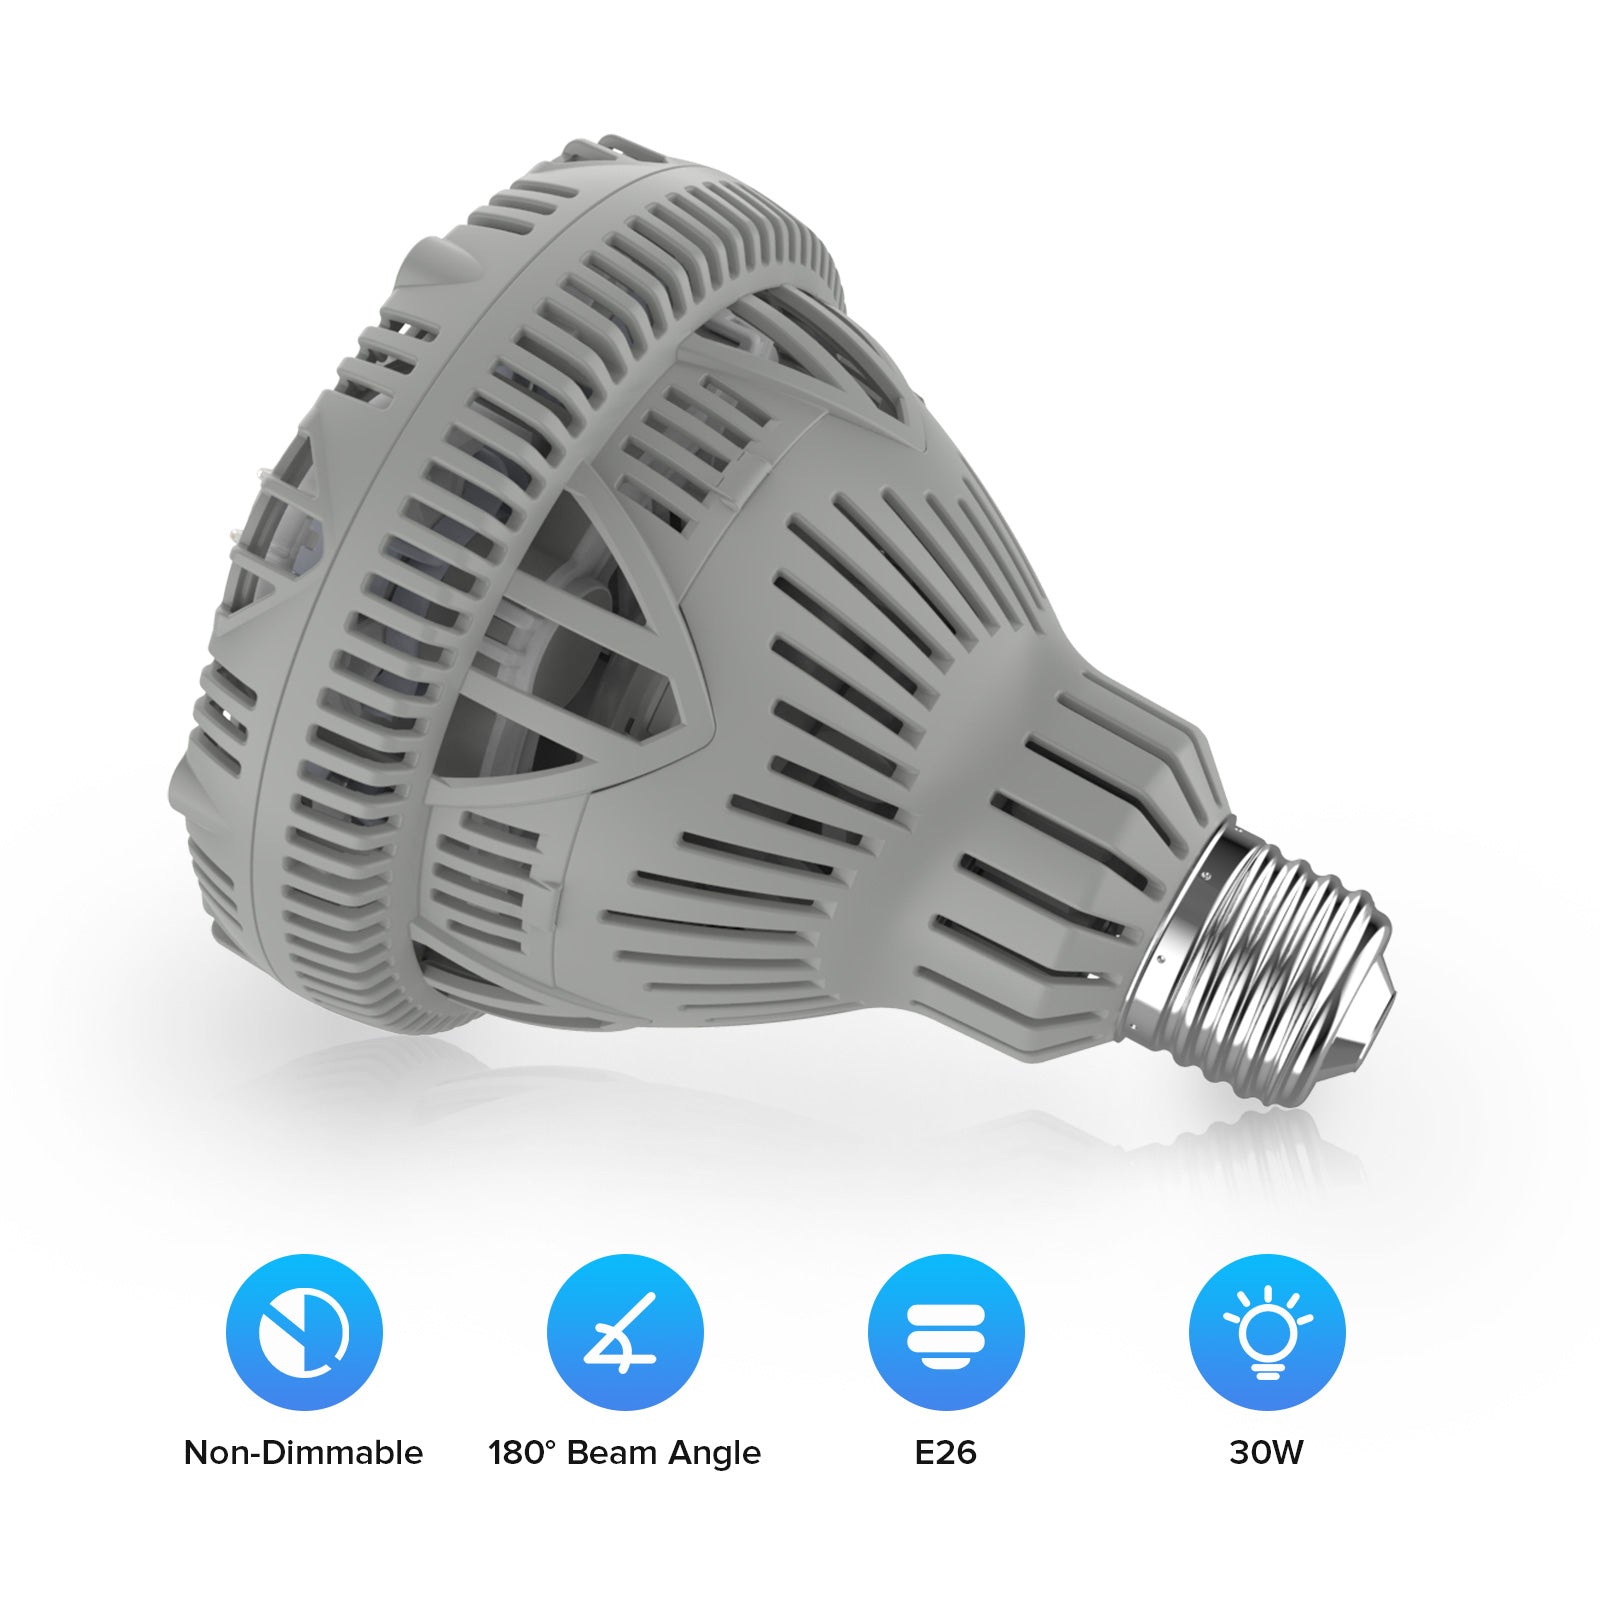 SG BR30 40W Warehouse Led Light Bulb,Non-Dimmable,180°Beam Angle,E26 socket,30W.